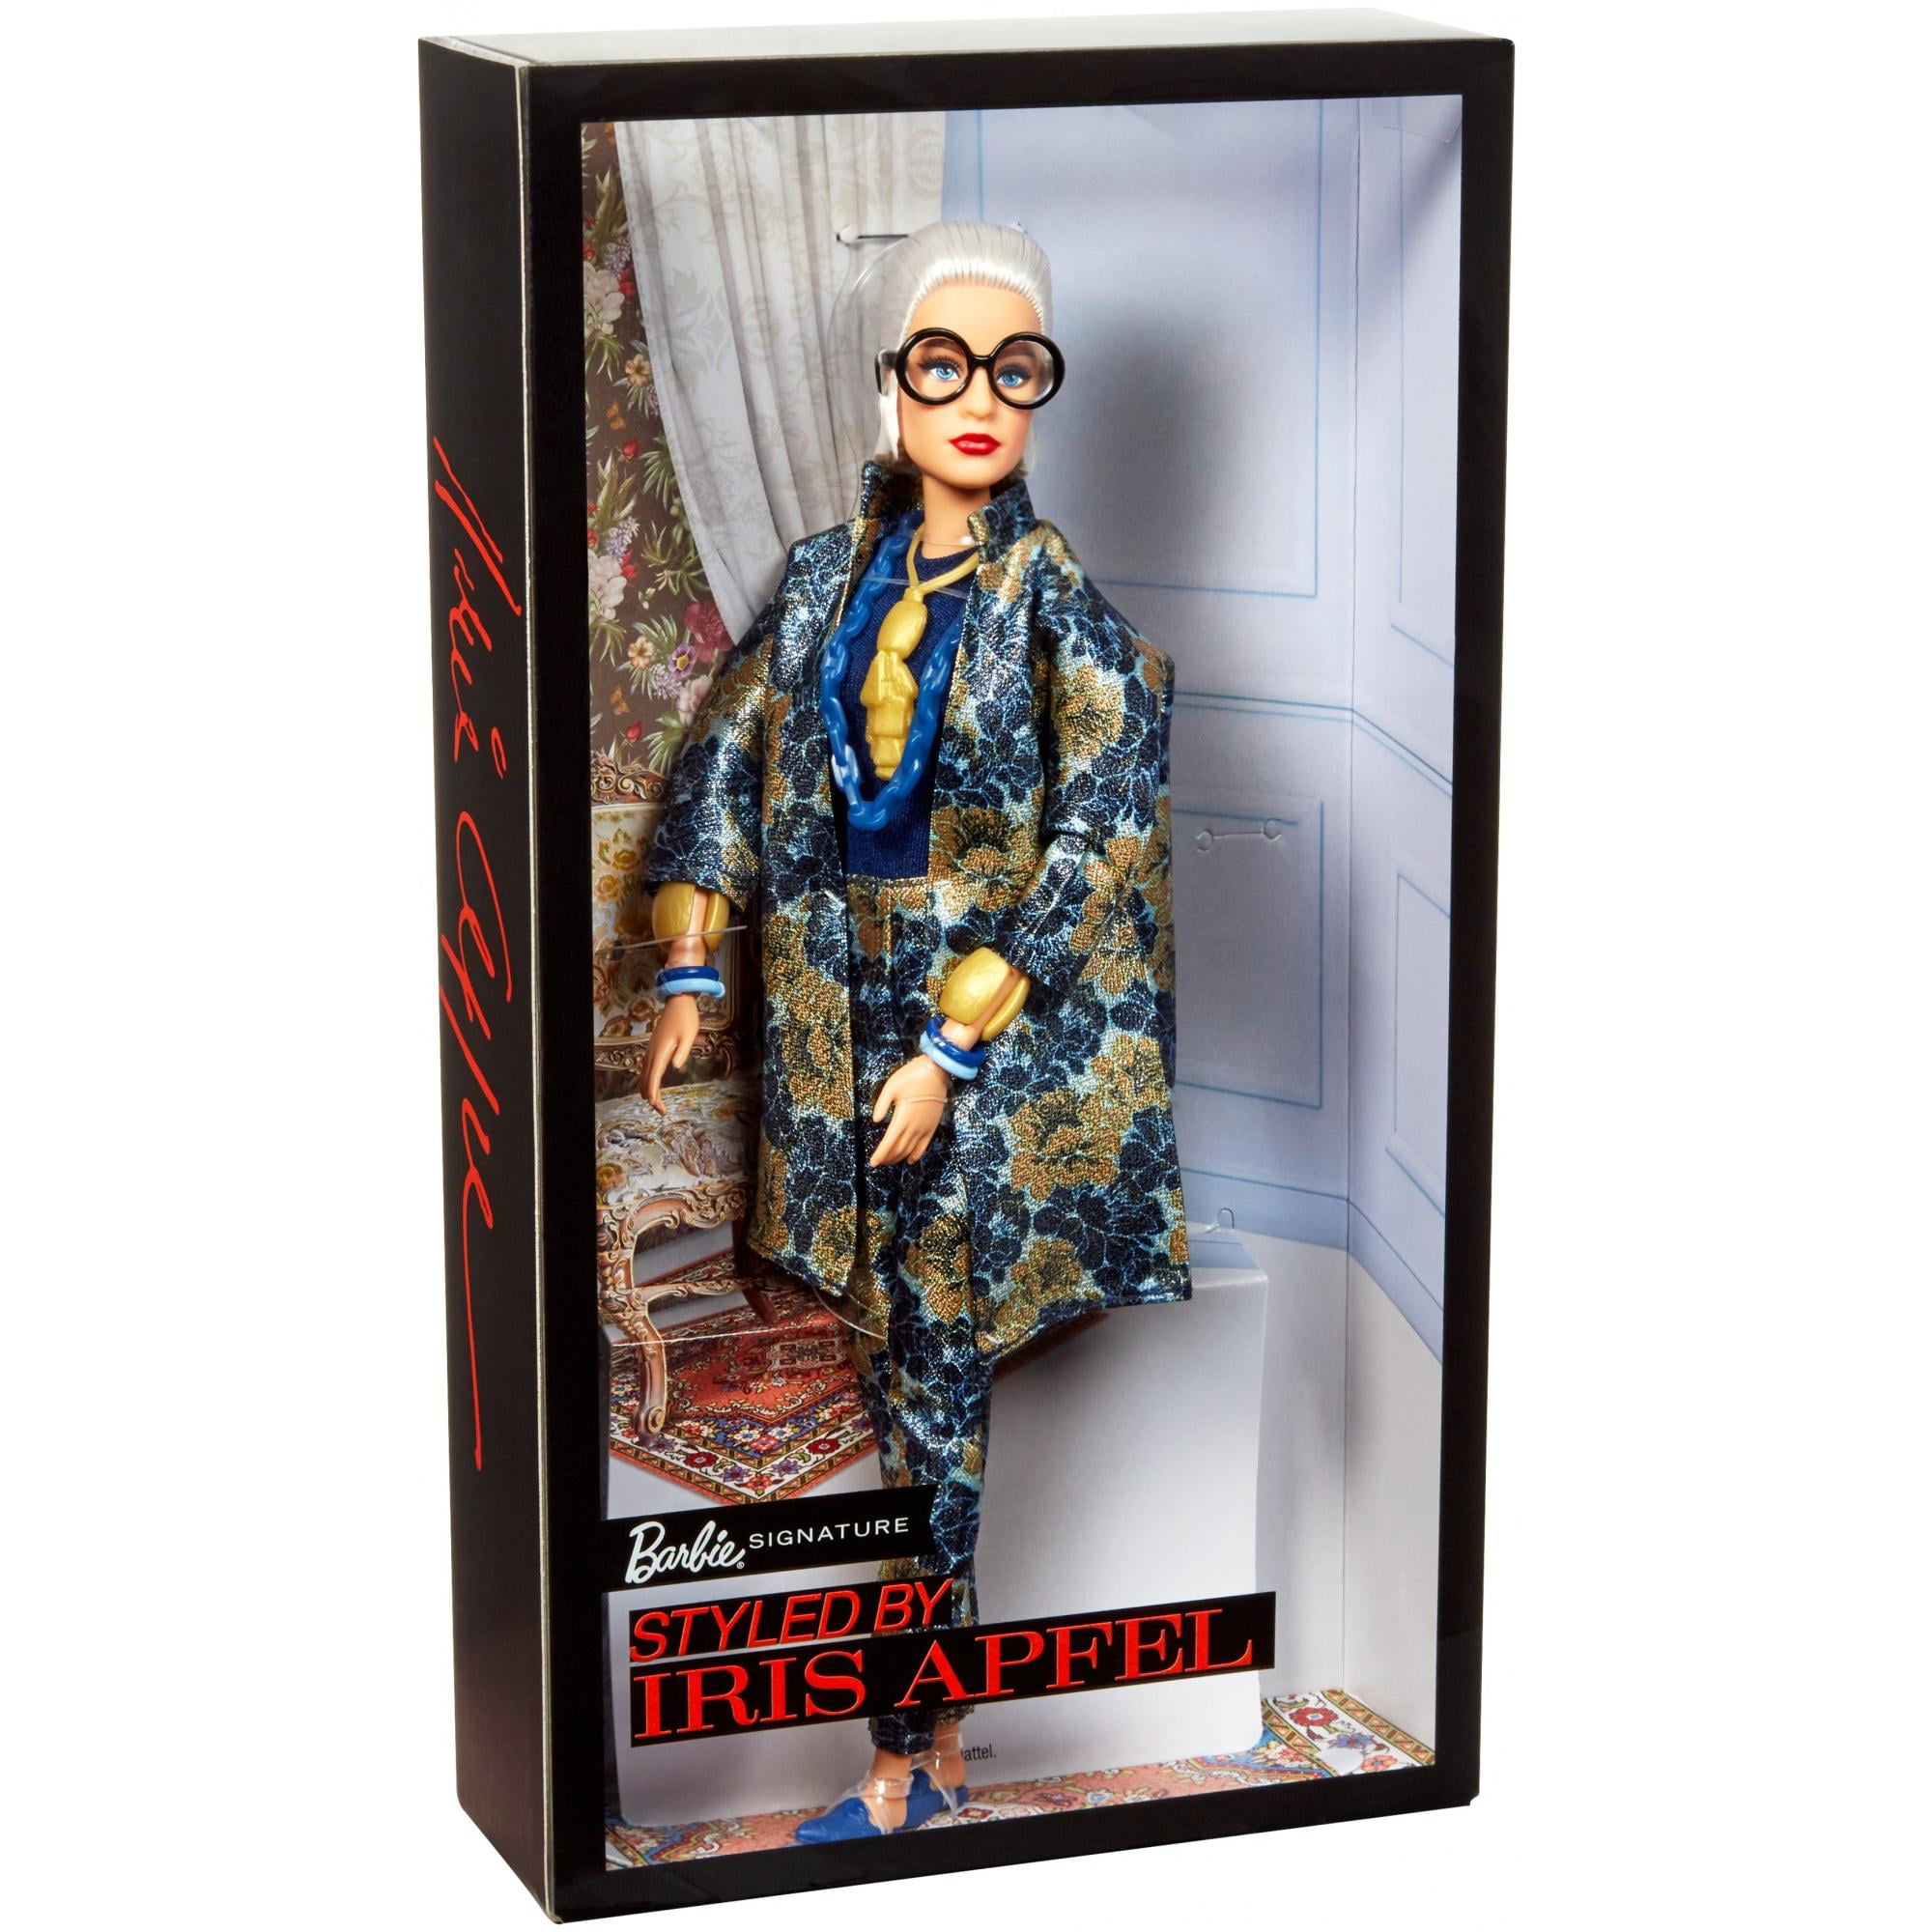 where to buy iris apfel barbie doll